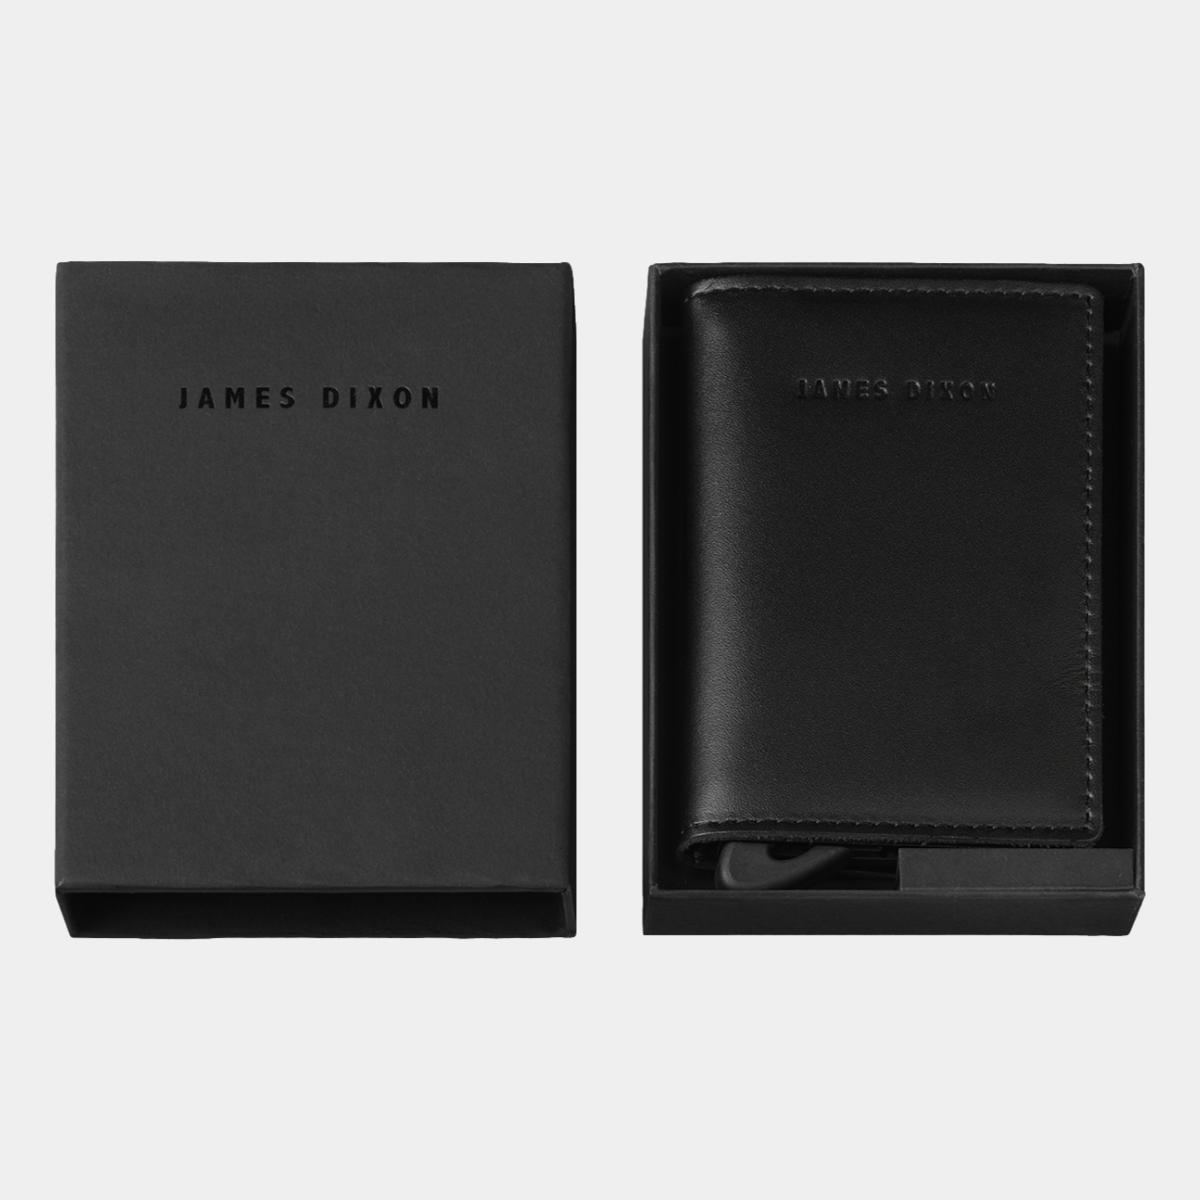 jd0121 james dixon puro one all black coin pocket wallet box